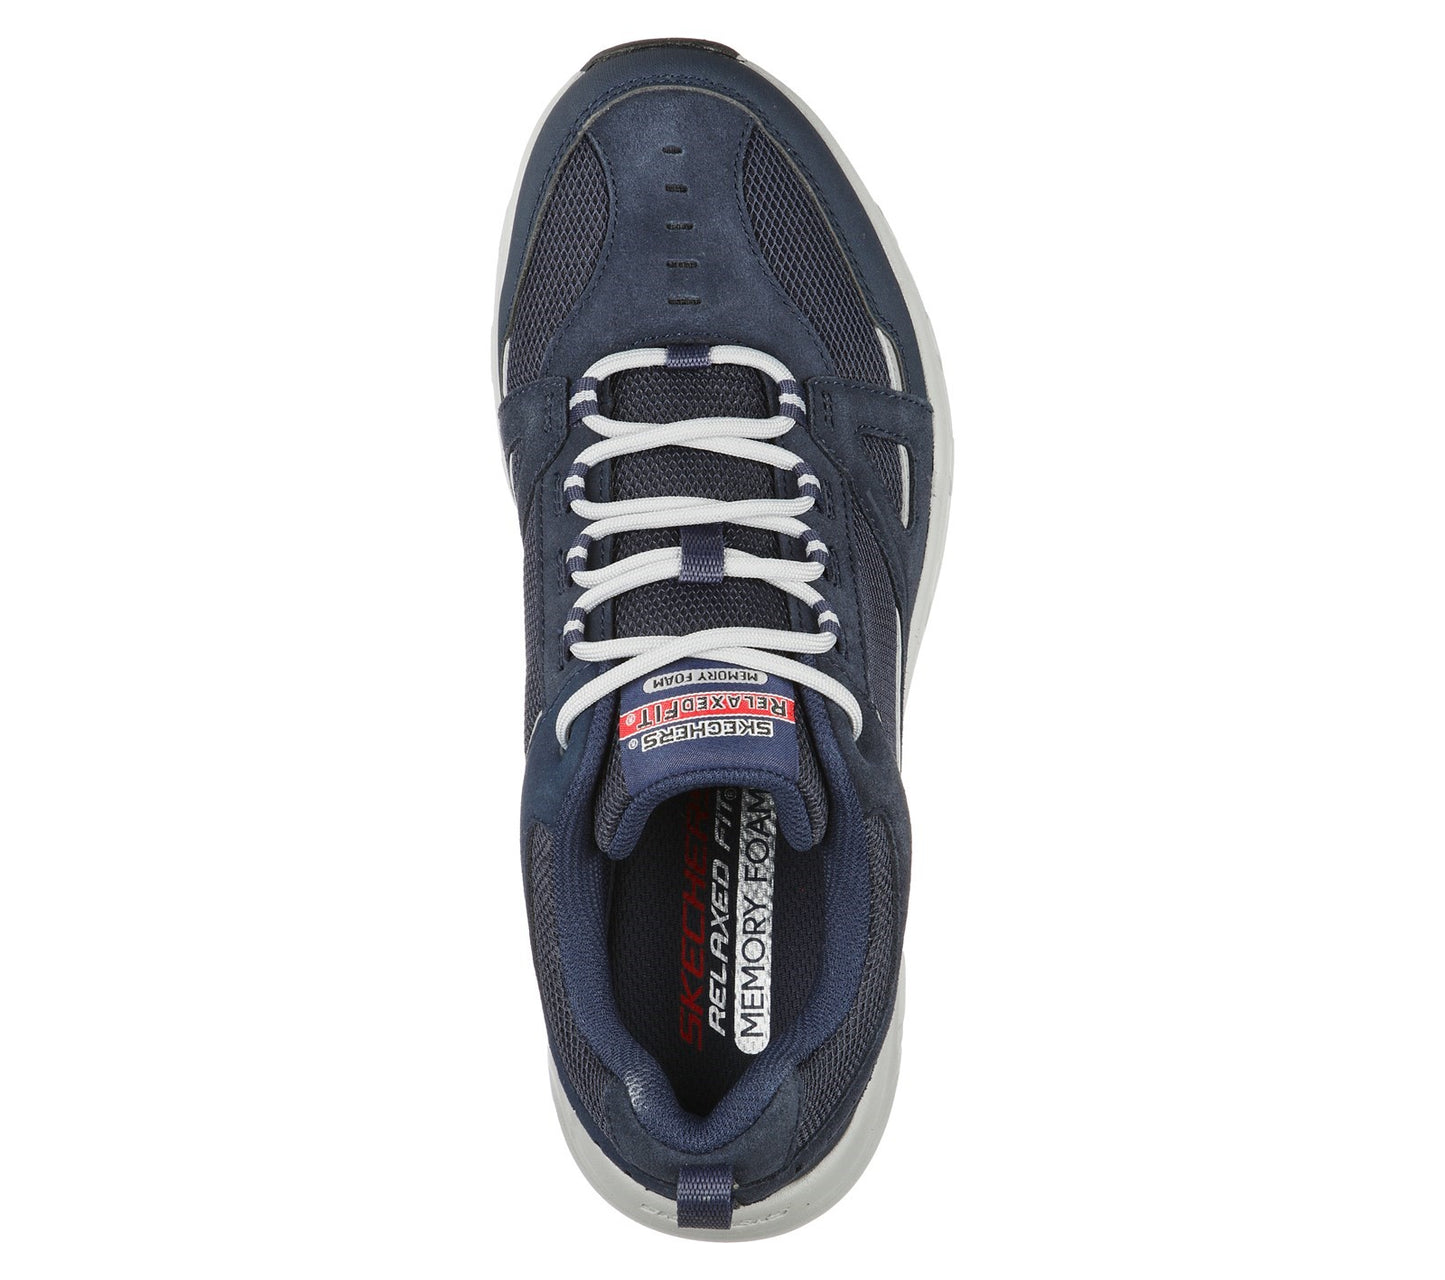 Men's Skechers Oak Canyon Duelist Sports Shoes